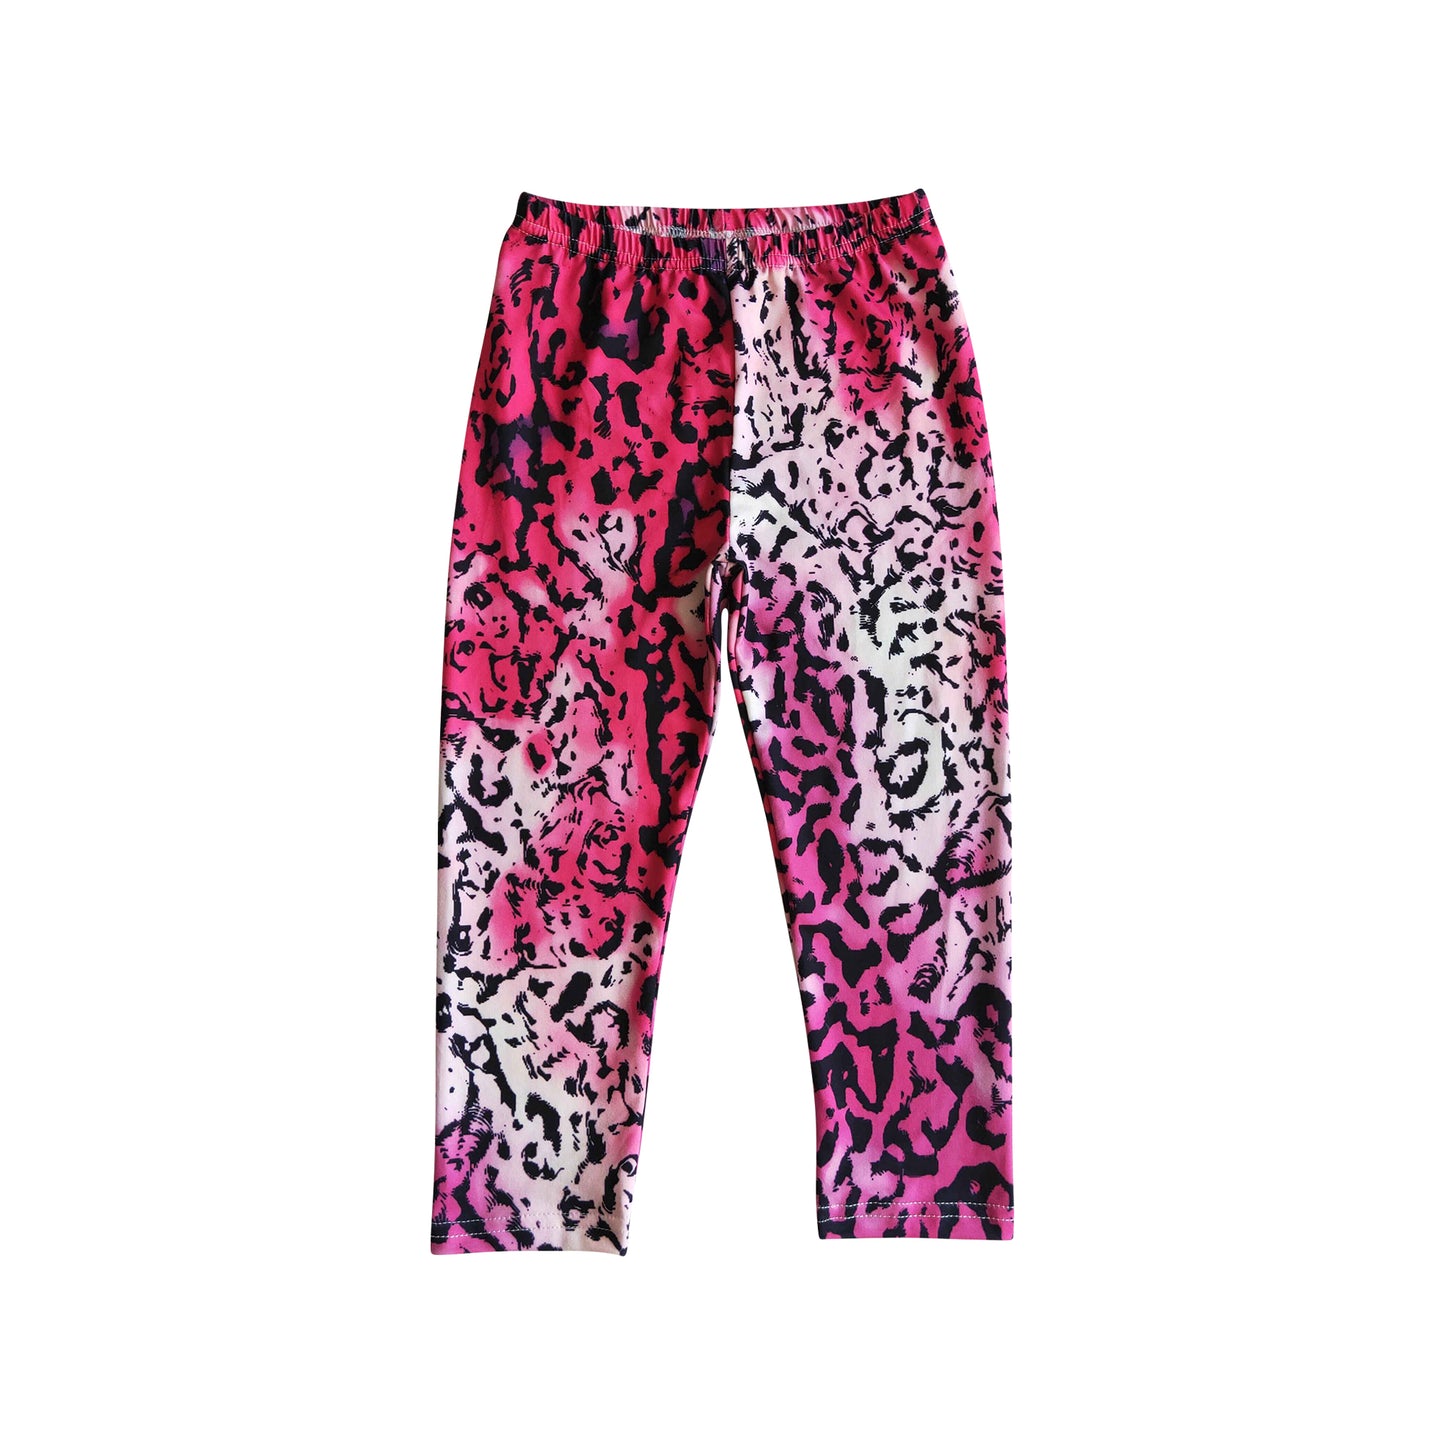 1pcs hot pink bleached leopard leggings for girl